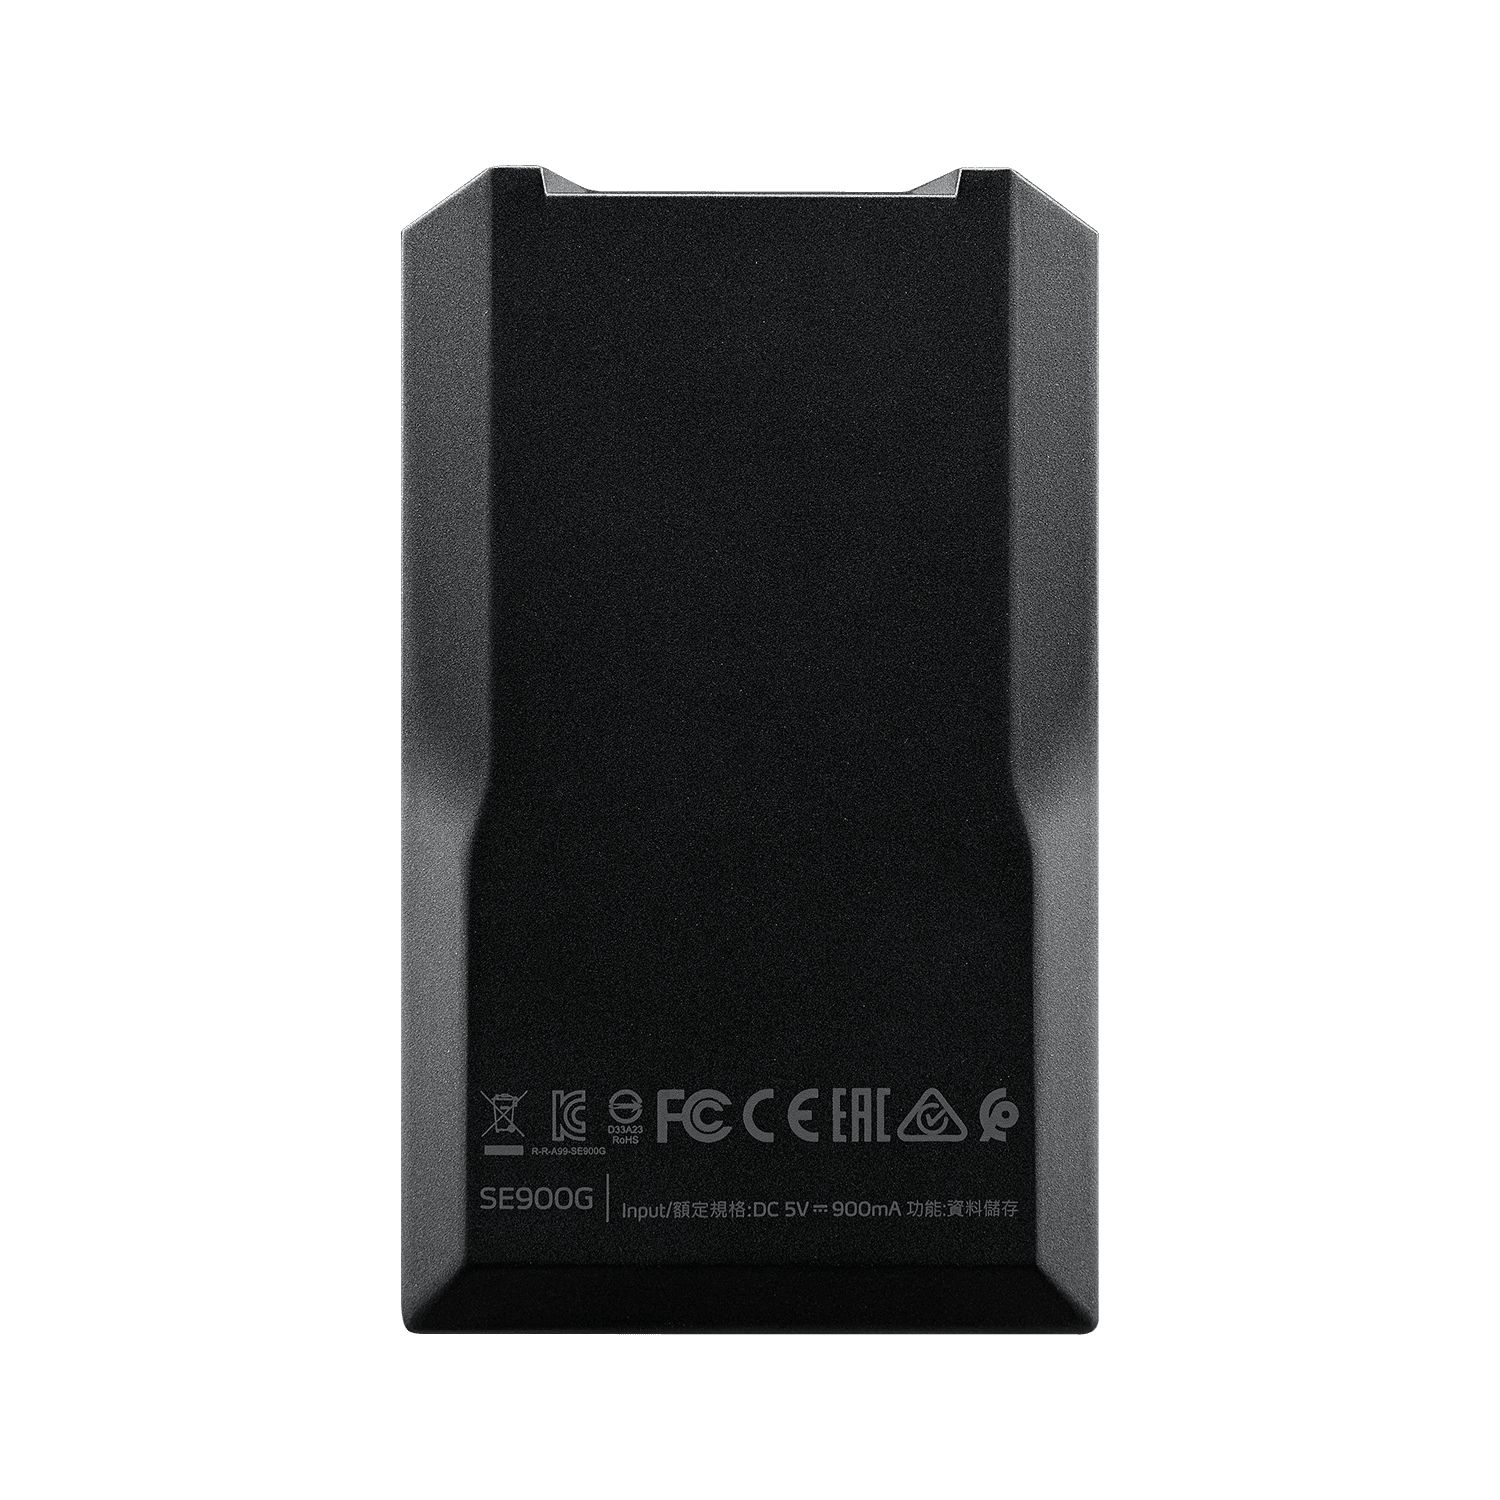 ADATA SE900G 512 GB Black_5